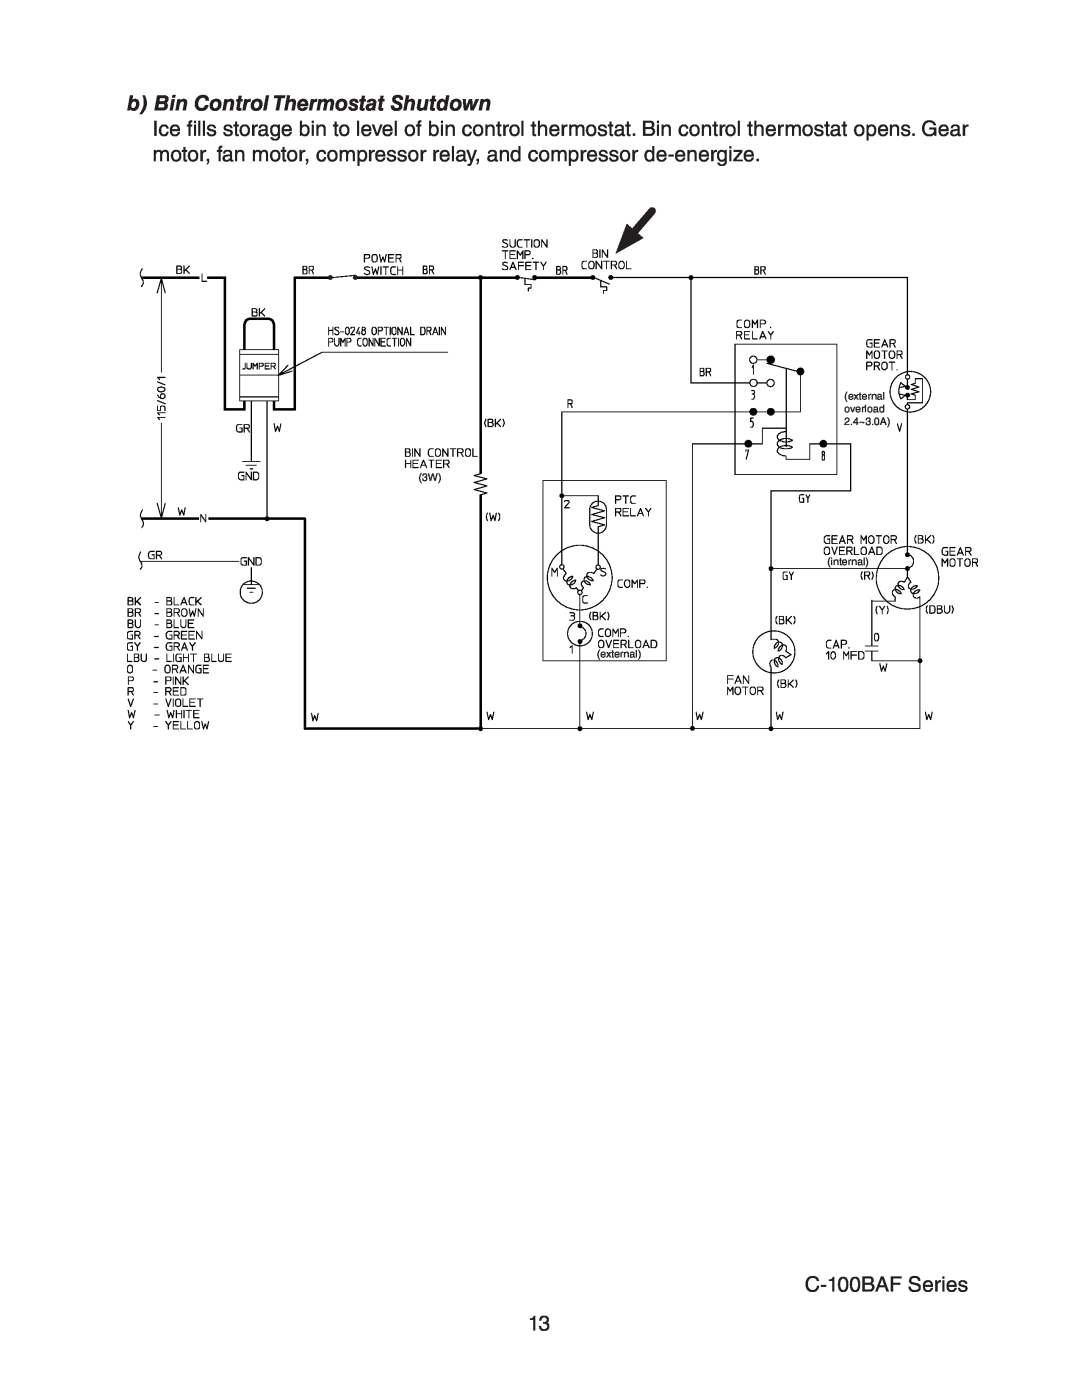 Hoshizaki C-100BAF-ADDS service manual bBin Control Thermostat Shutdown, external, overload, 2.4~3.0A, internal 